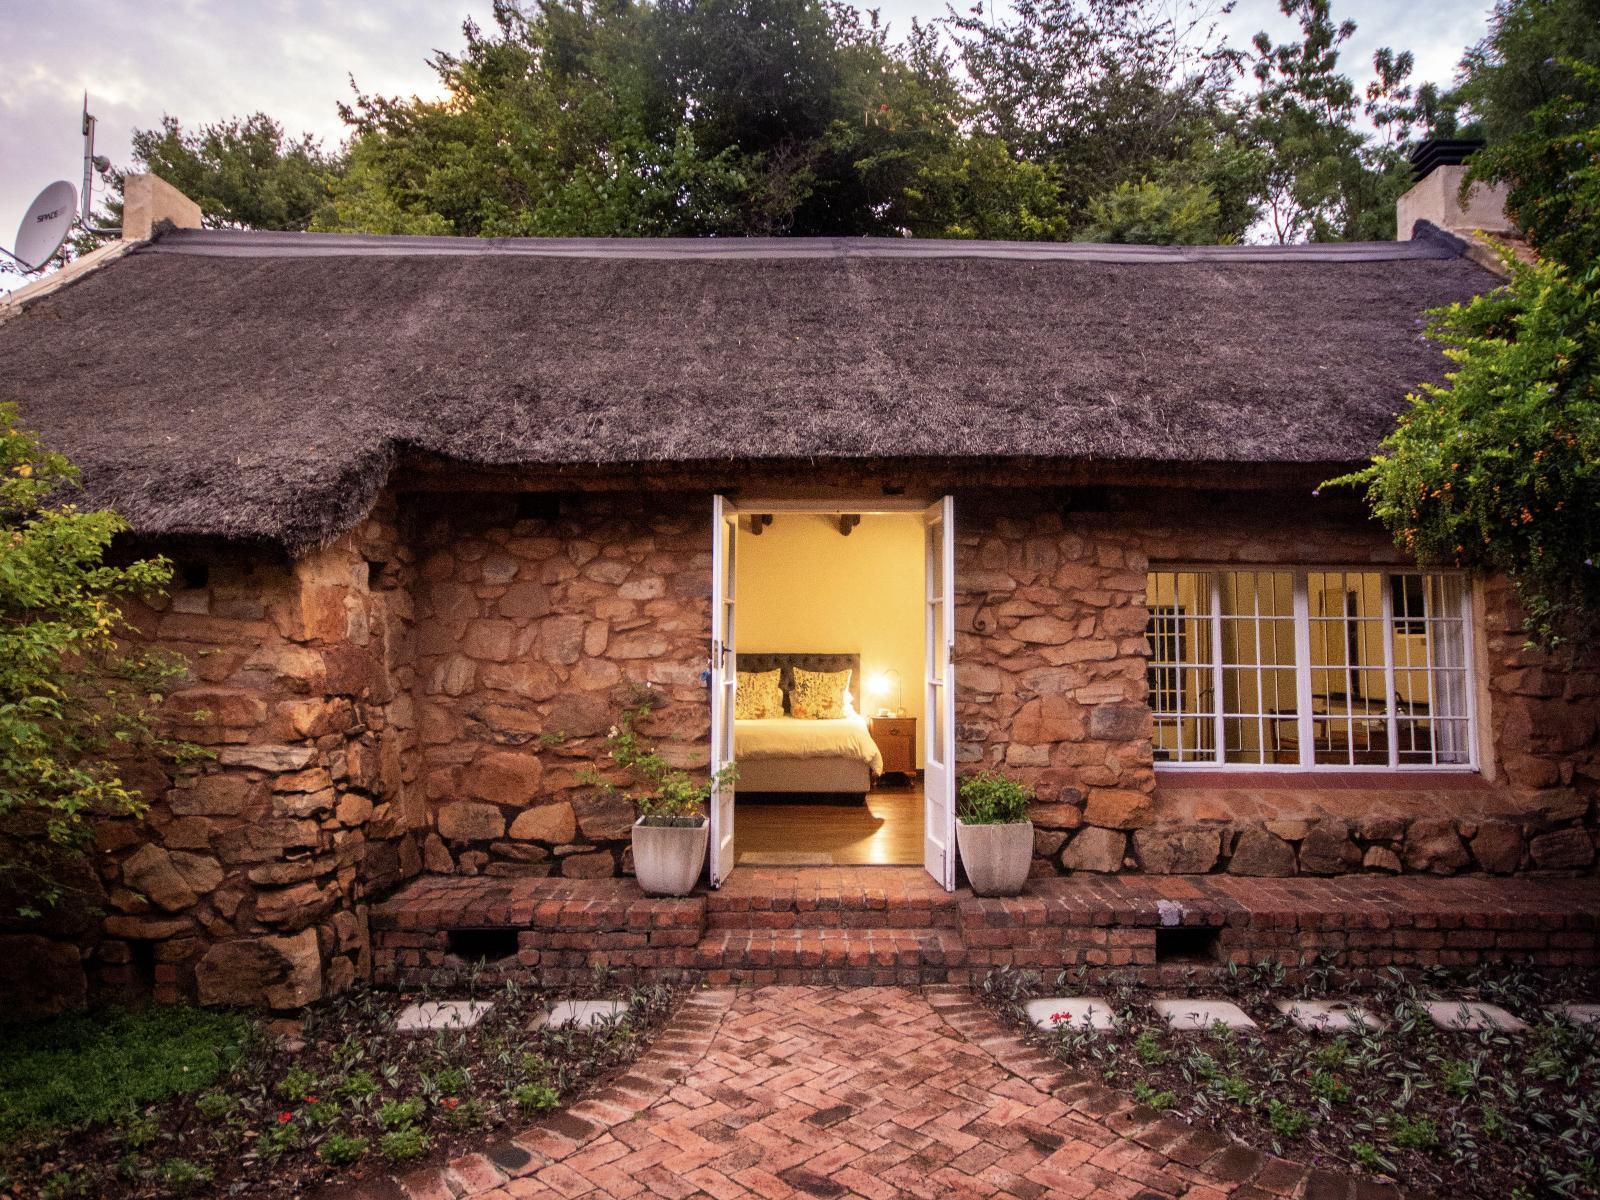 Pierneef S Kraal Lynnwood Manor Pretoria Tshwane Gauteng South Africa 